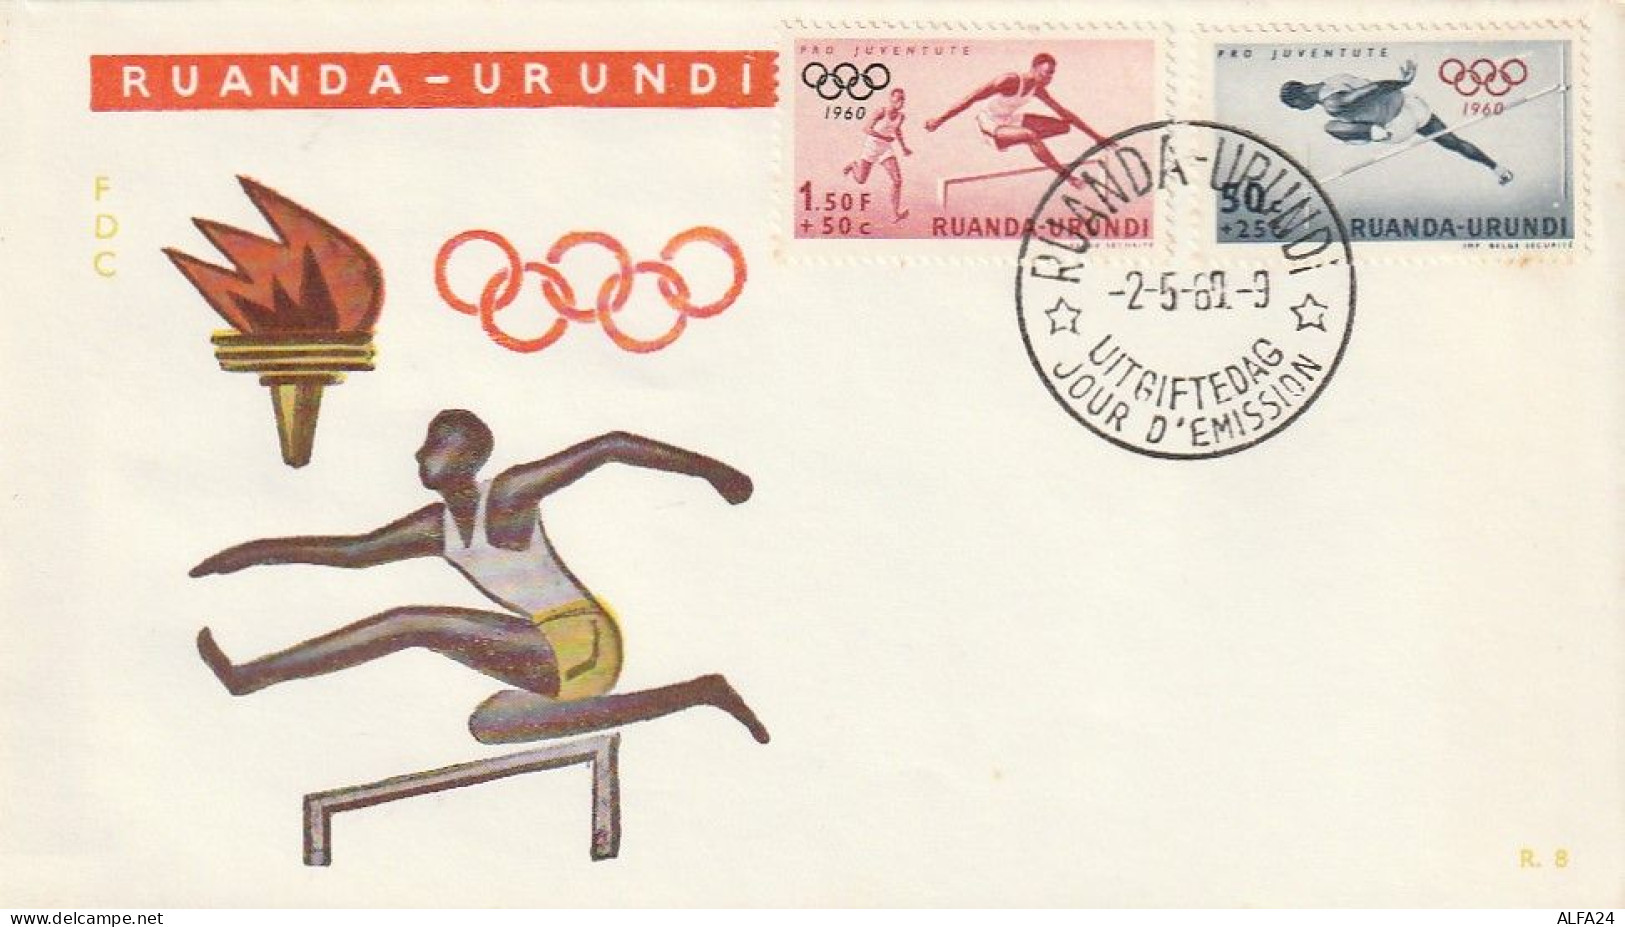 FDC GIOCHI OLIMPICI 1960 RUANDA URUNDI (OG242 - Verano 1960: Roma